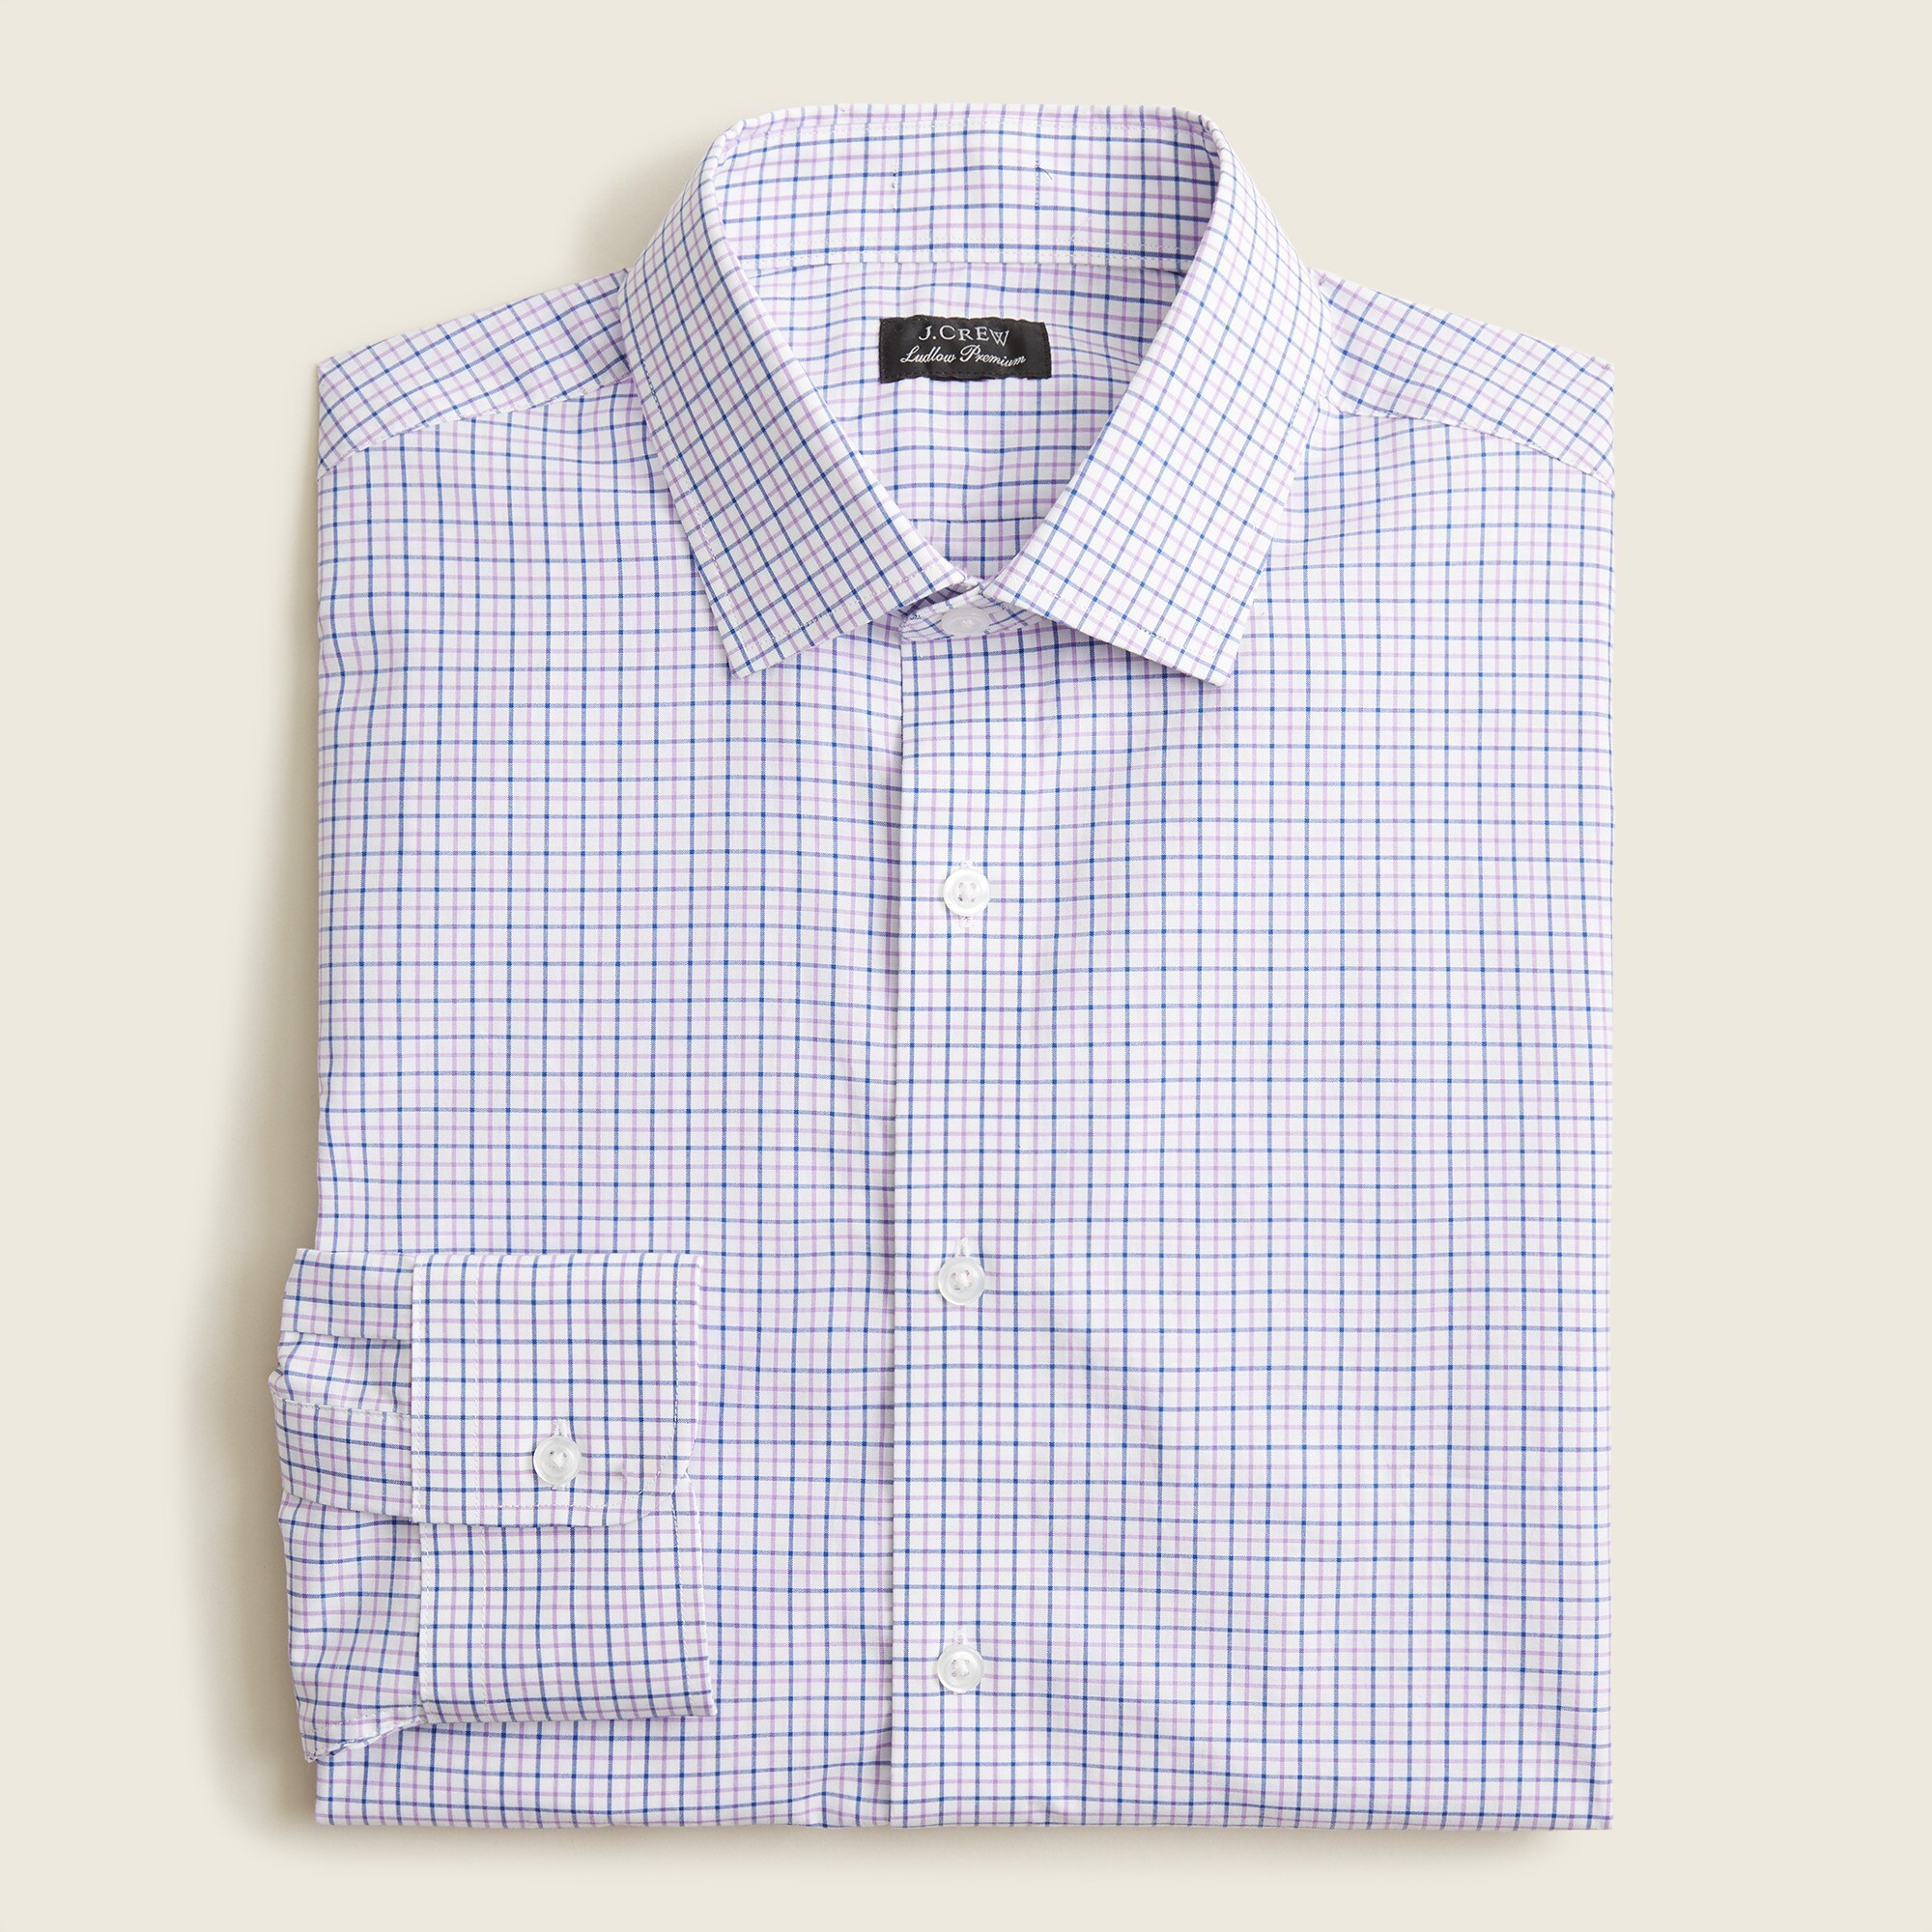  Slim-fit Ludlow Premium fine cotton dress shirt